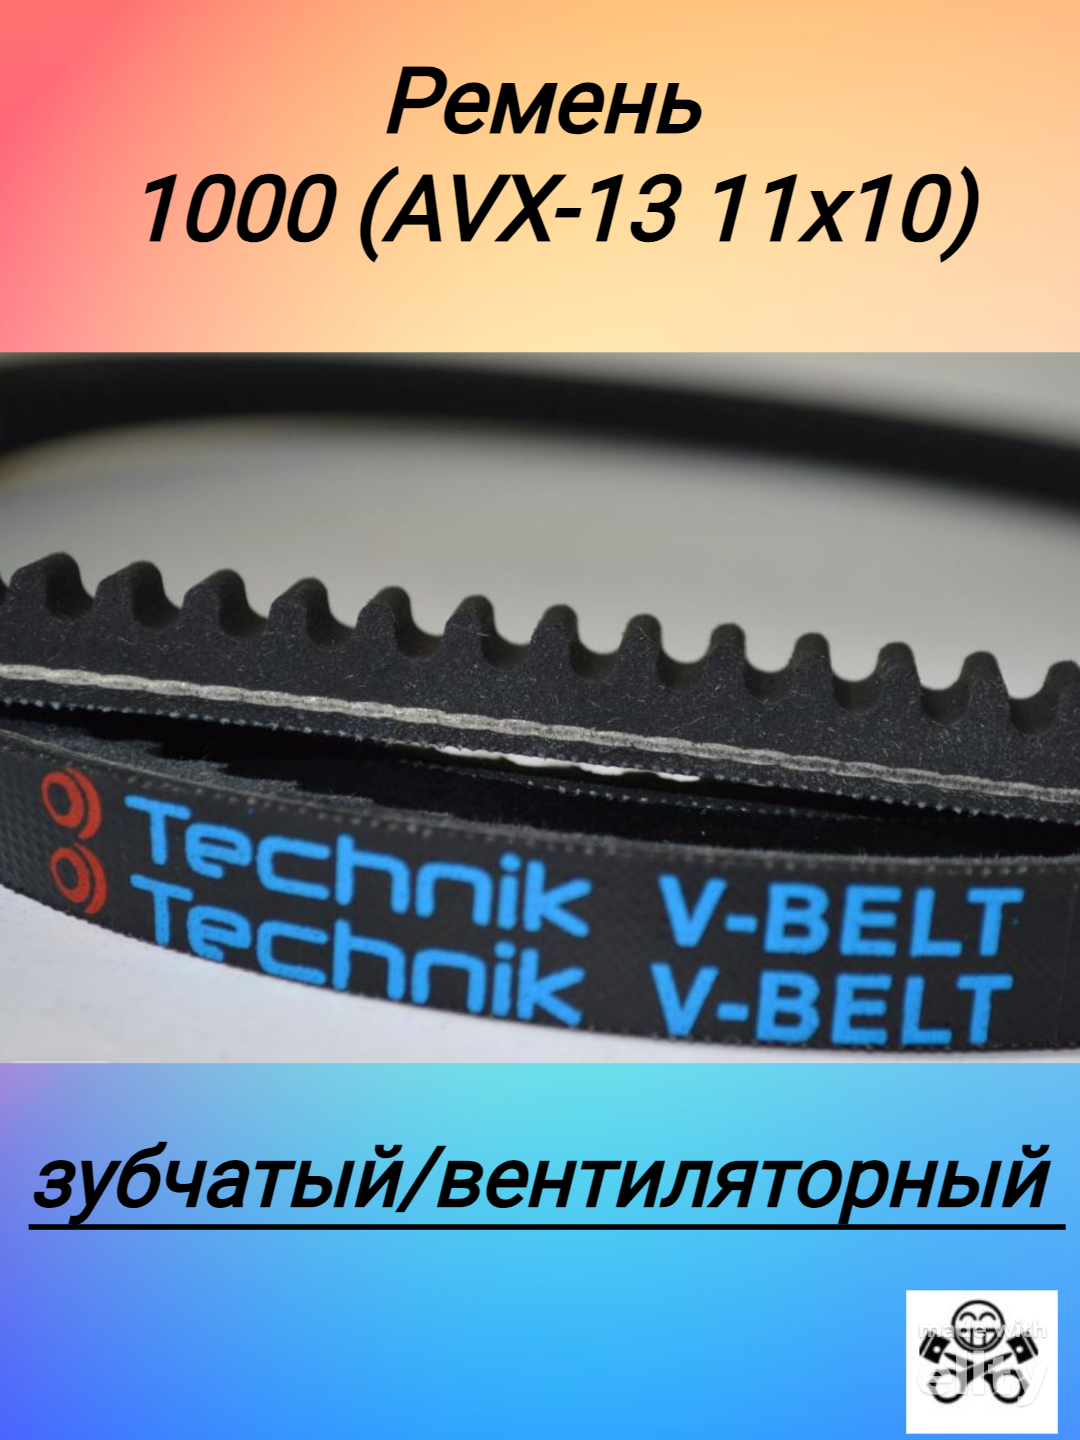 Ремень 1000 (AVX-13 11х10) вентиляторный зубчатый (Technik)